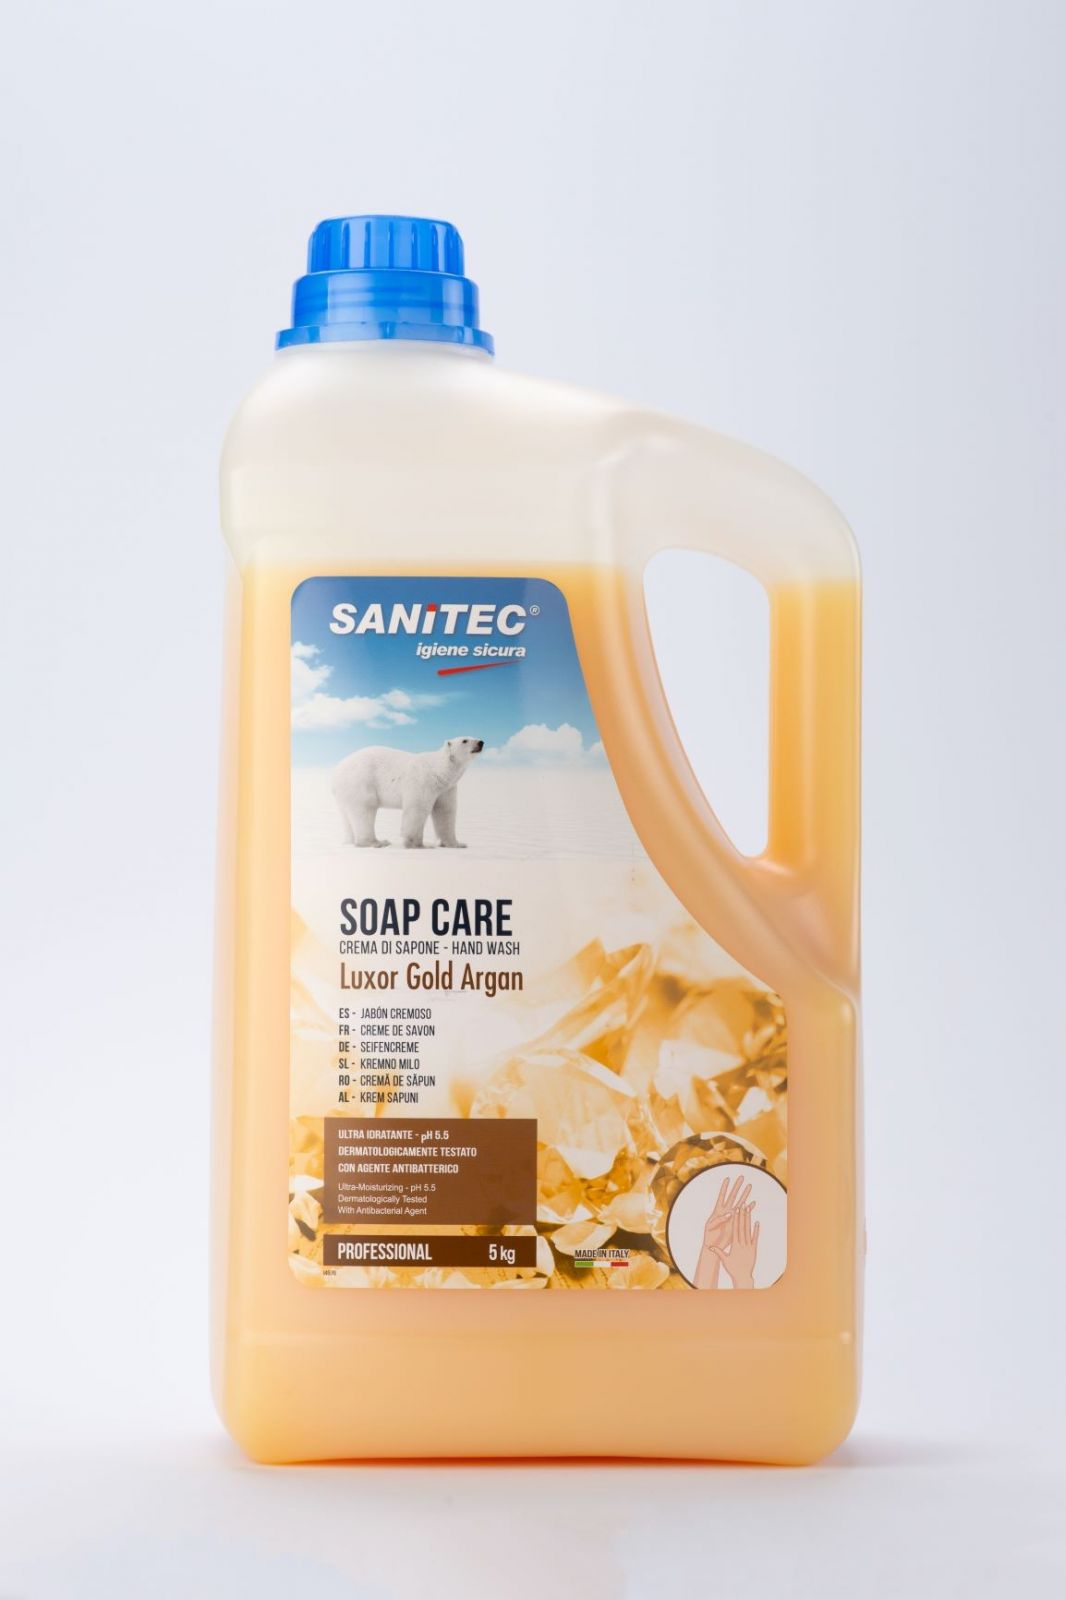 Immagine Sanitec soap care luxor argan 5kg sapone liquido